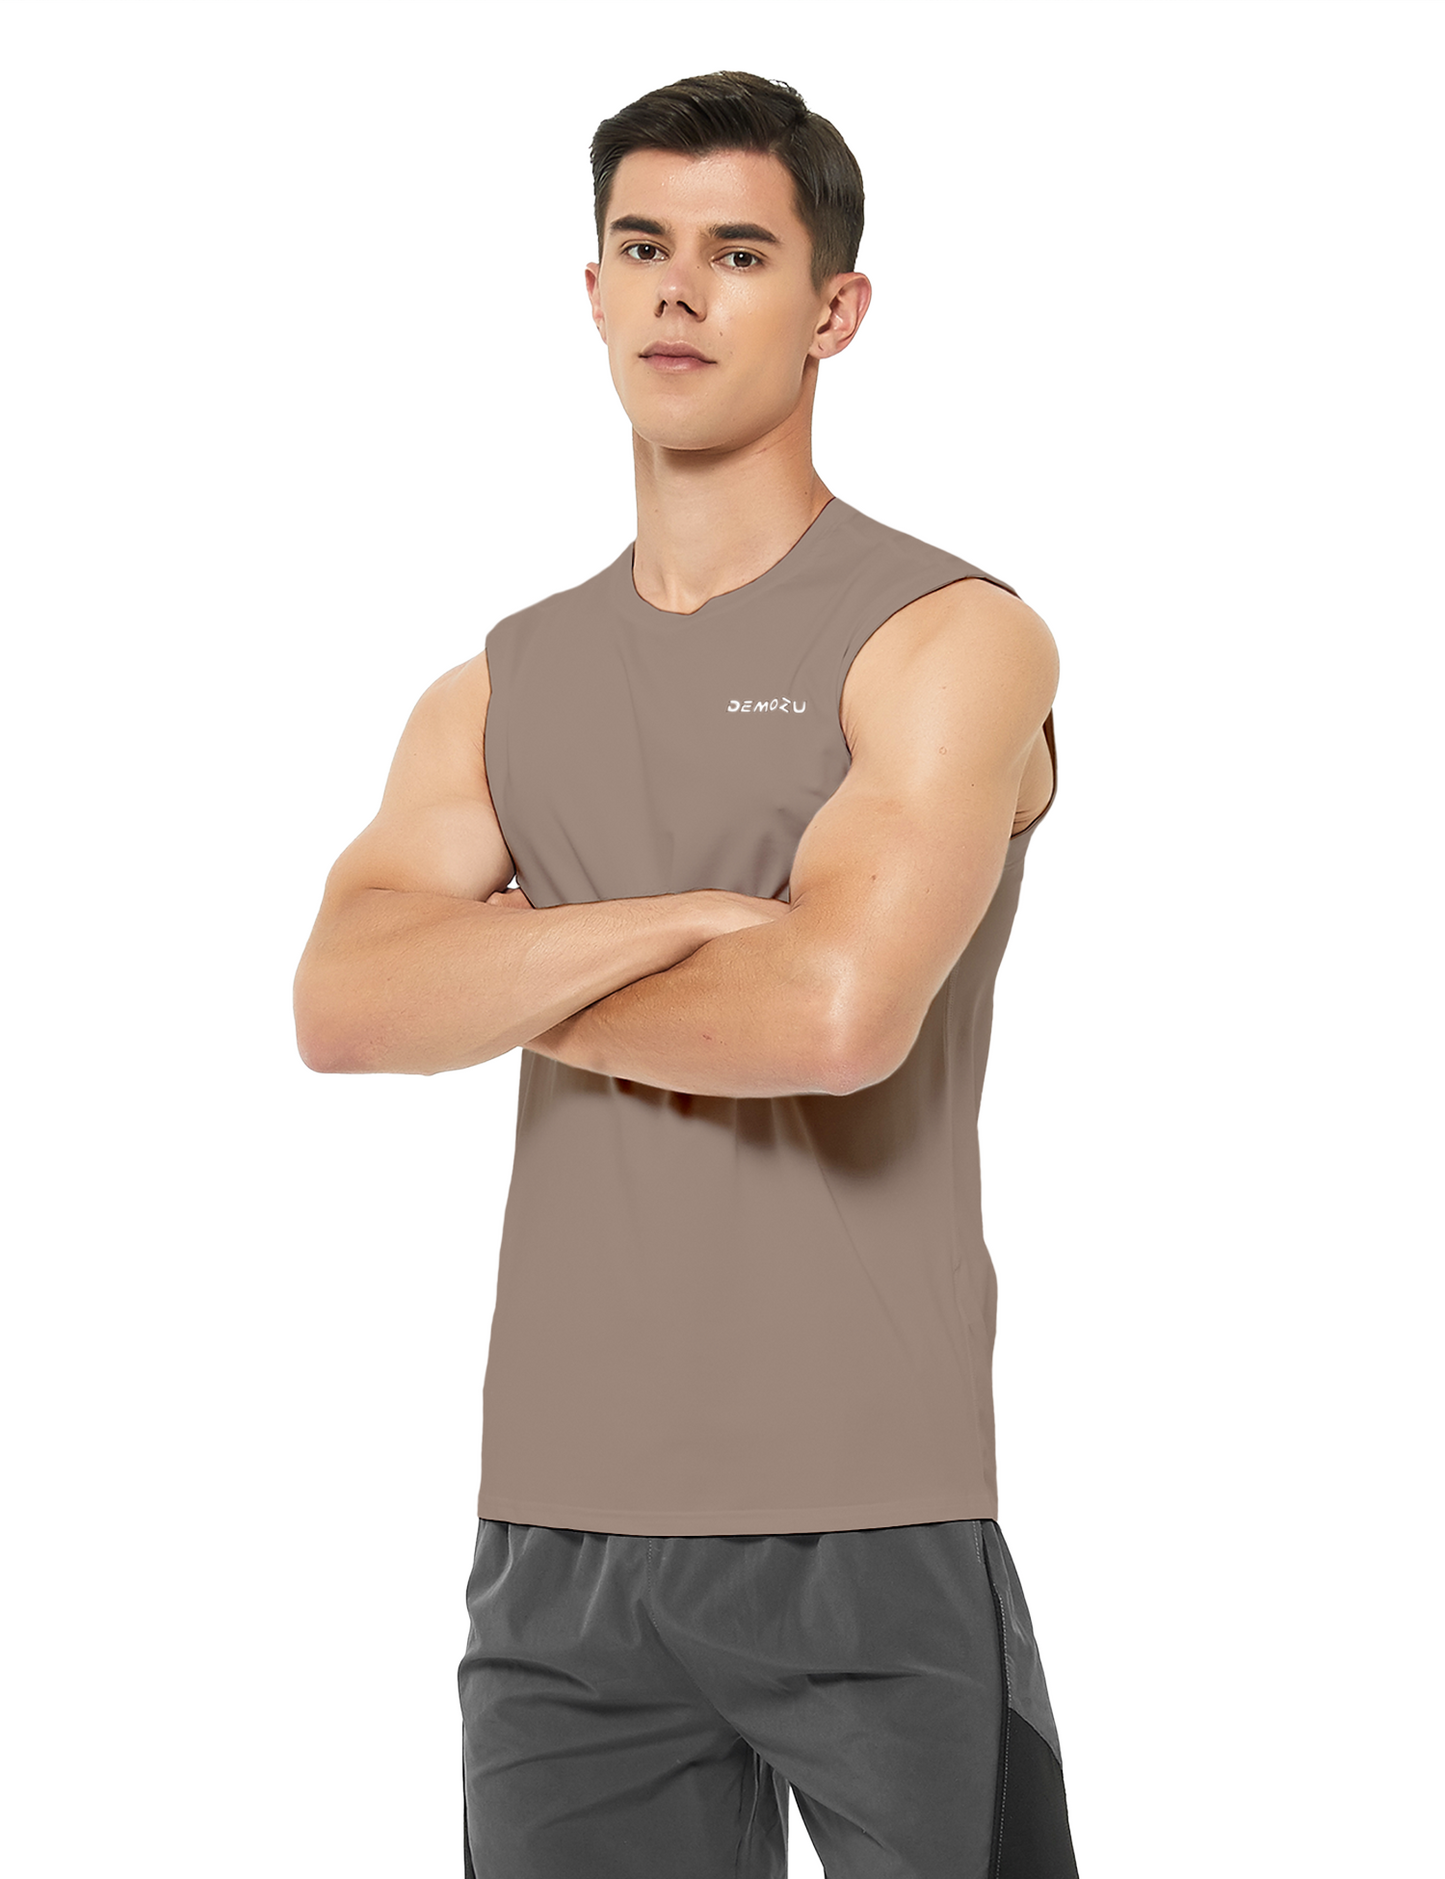 mens sleeveless workout swim shirts khaki